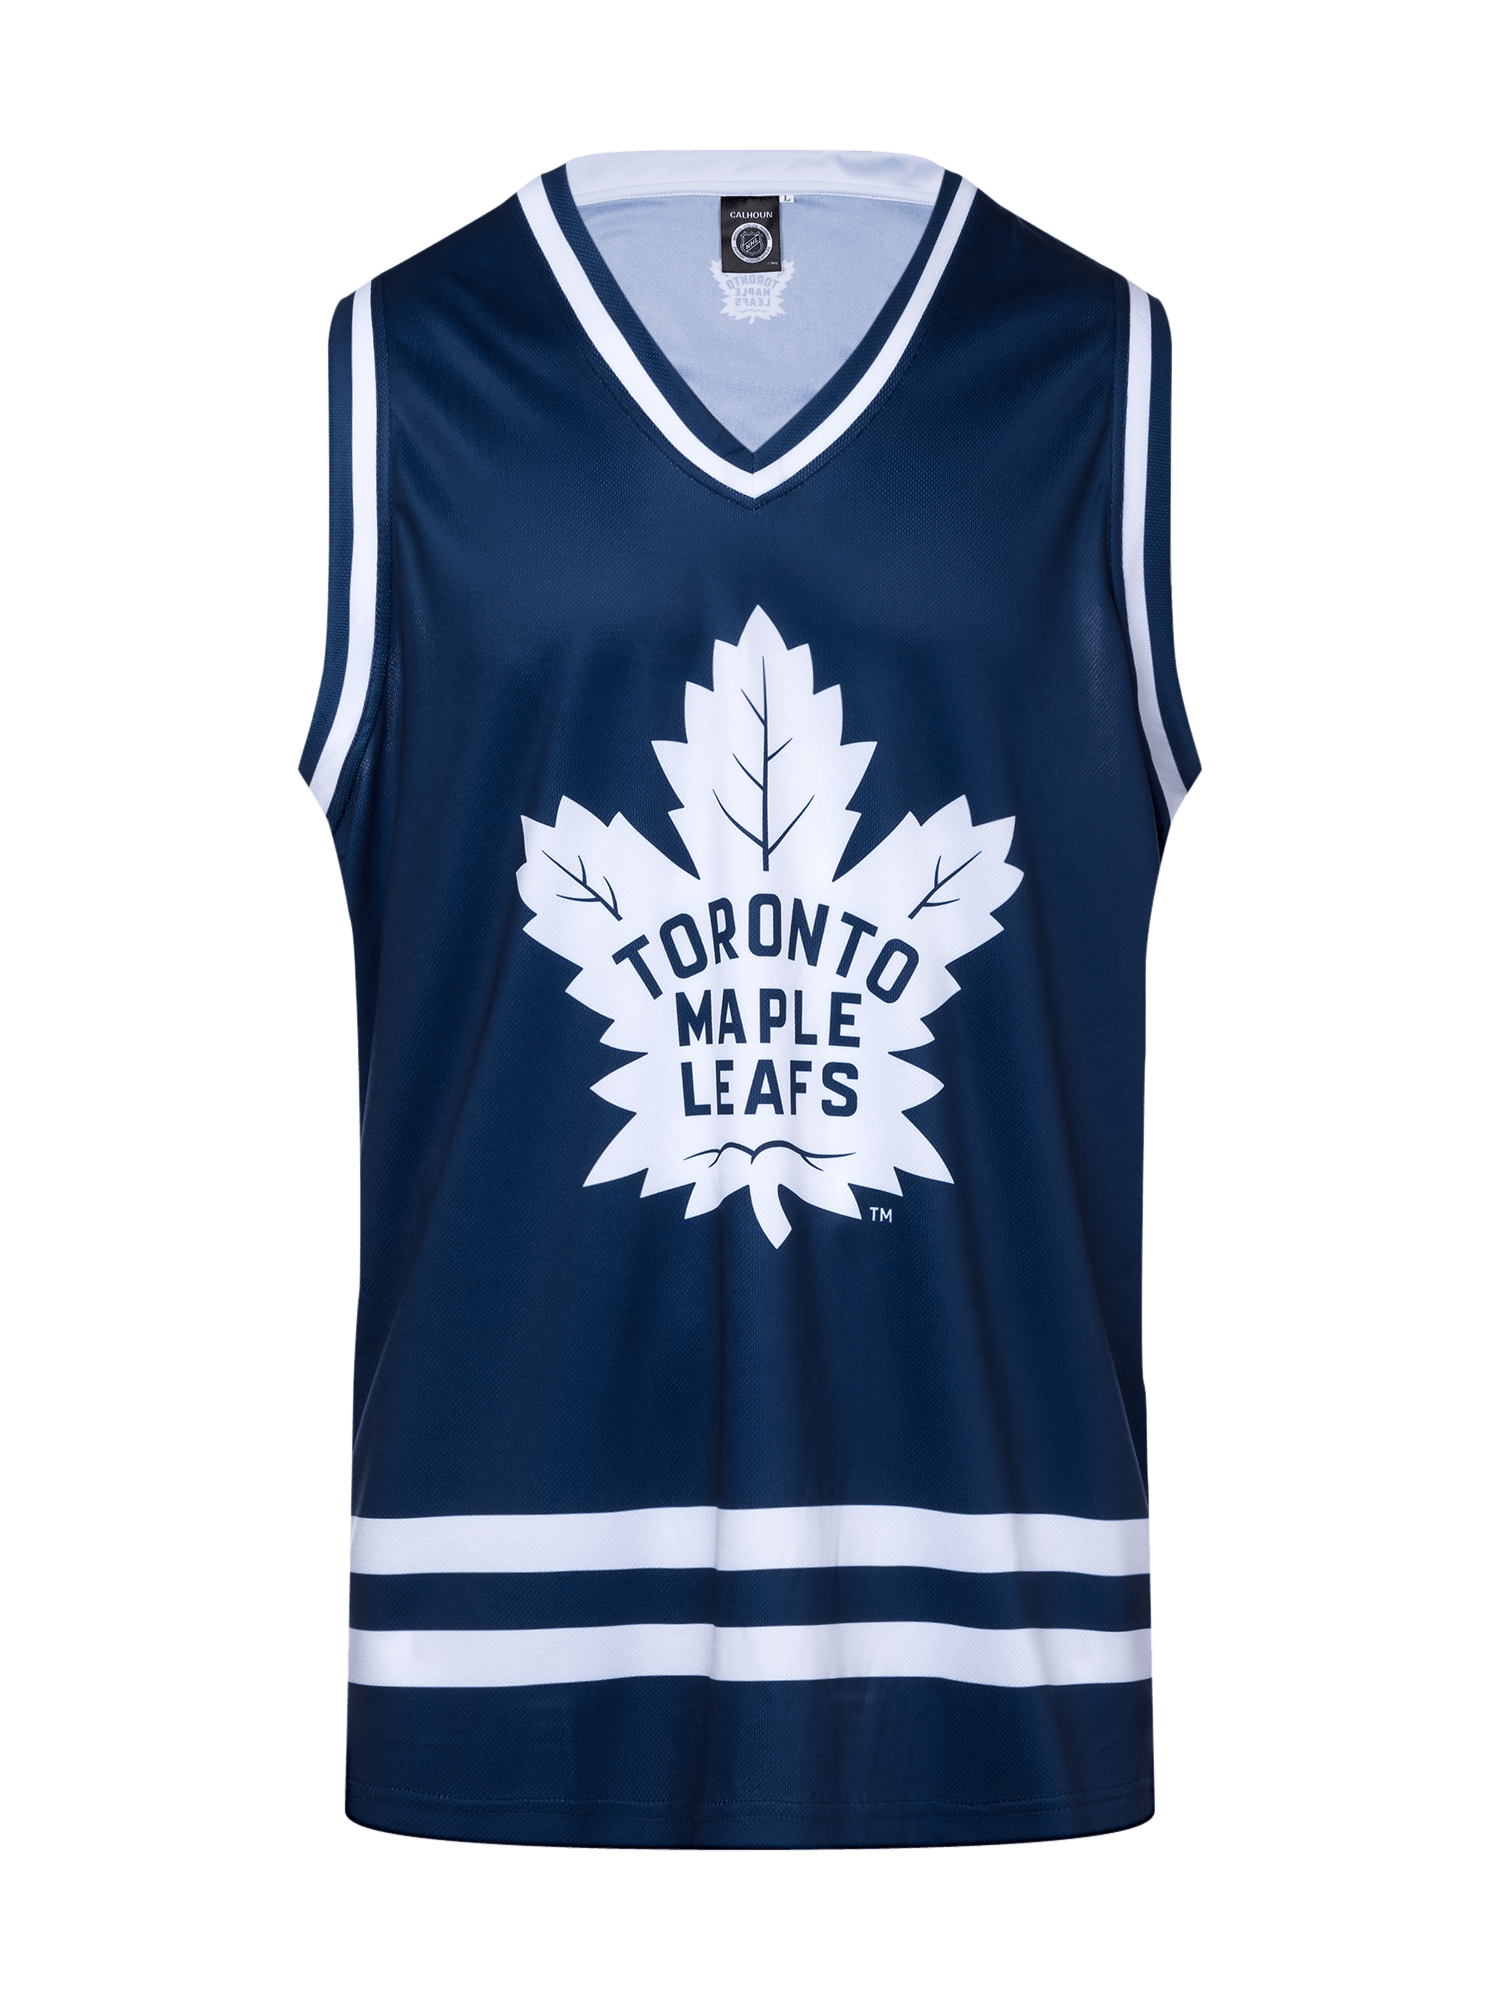 toronto maple leafs jersey